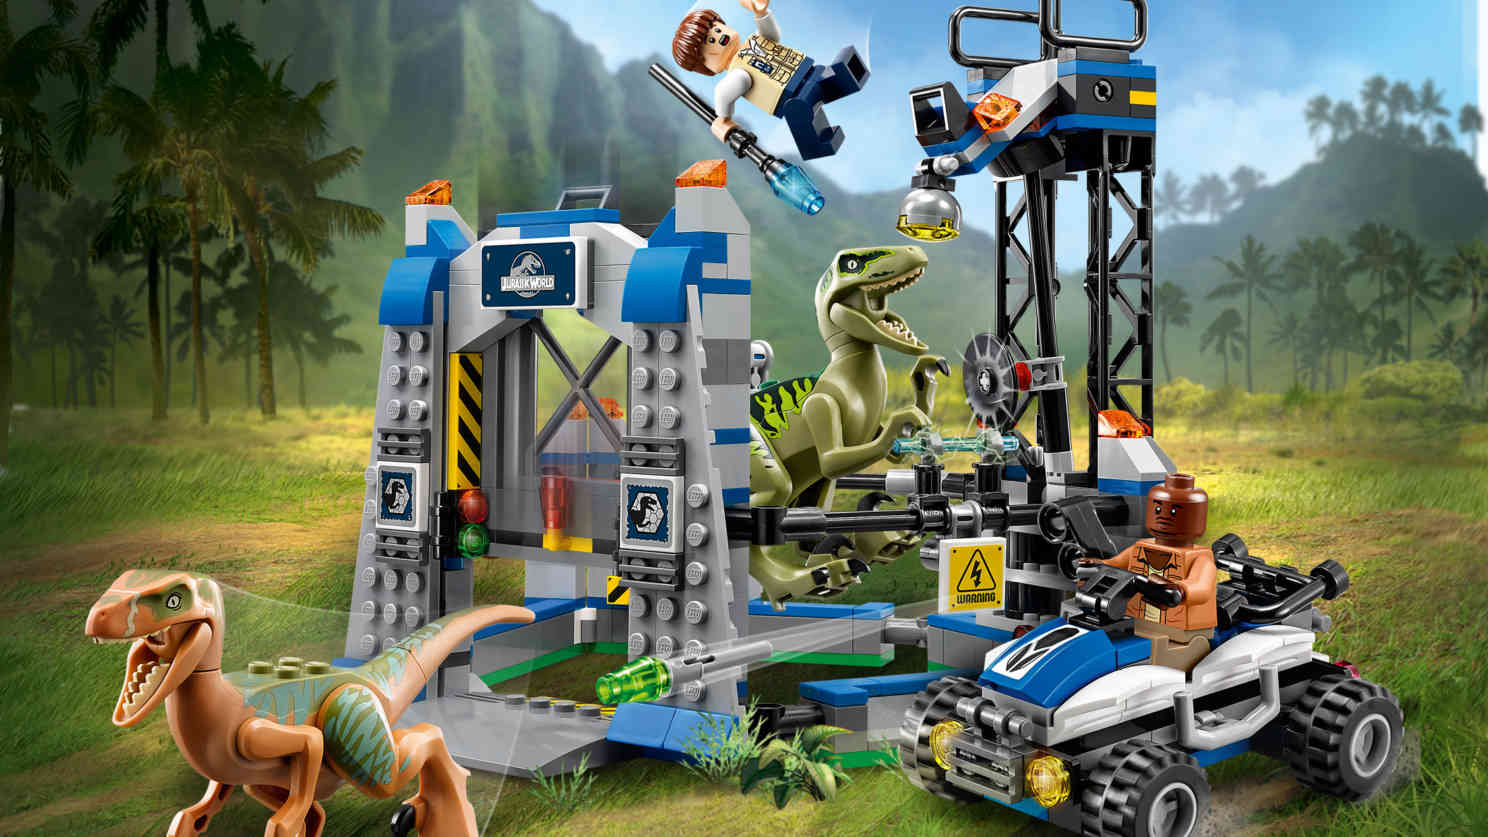 Lego jurassic world, Lego jurassic world dinosaurs, Jurassic world wallpaper